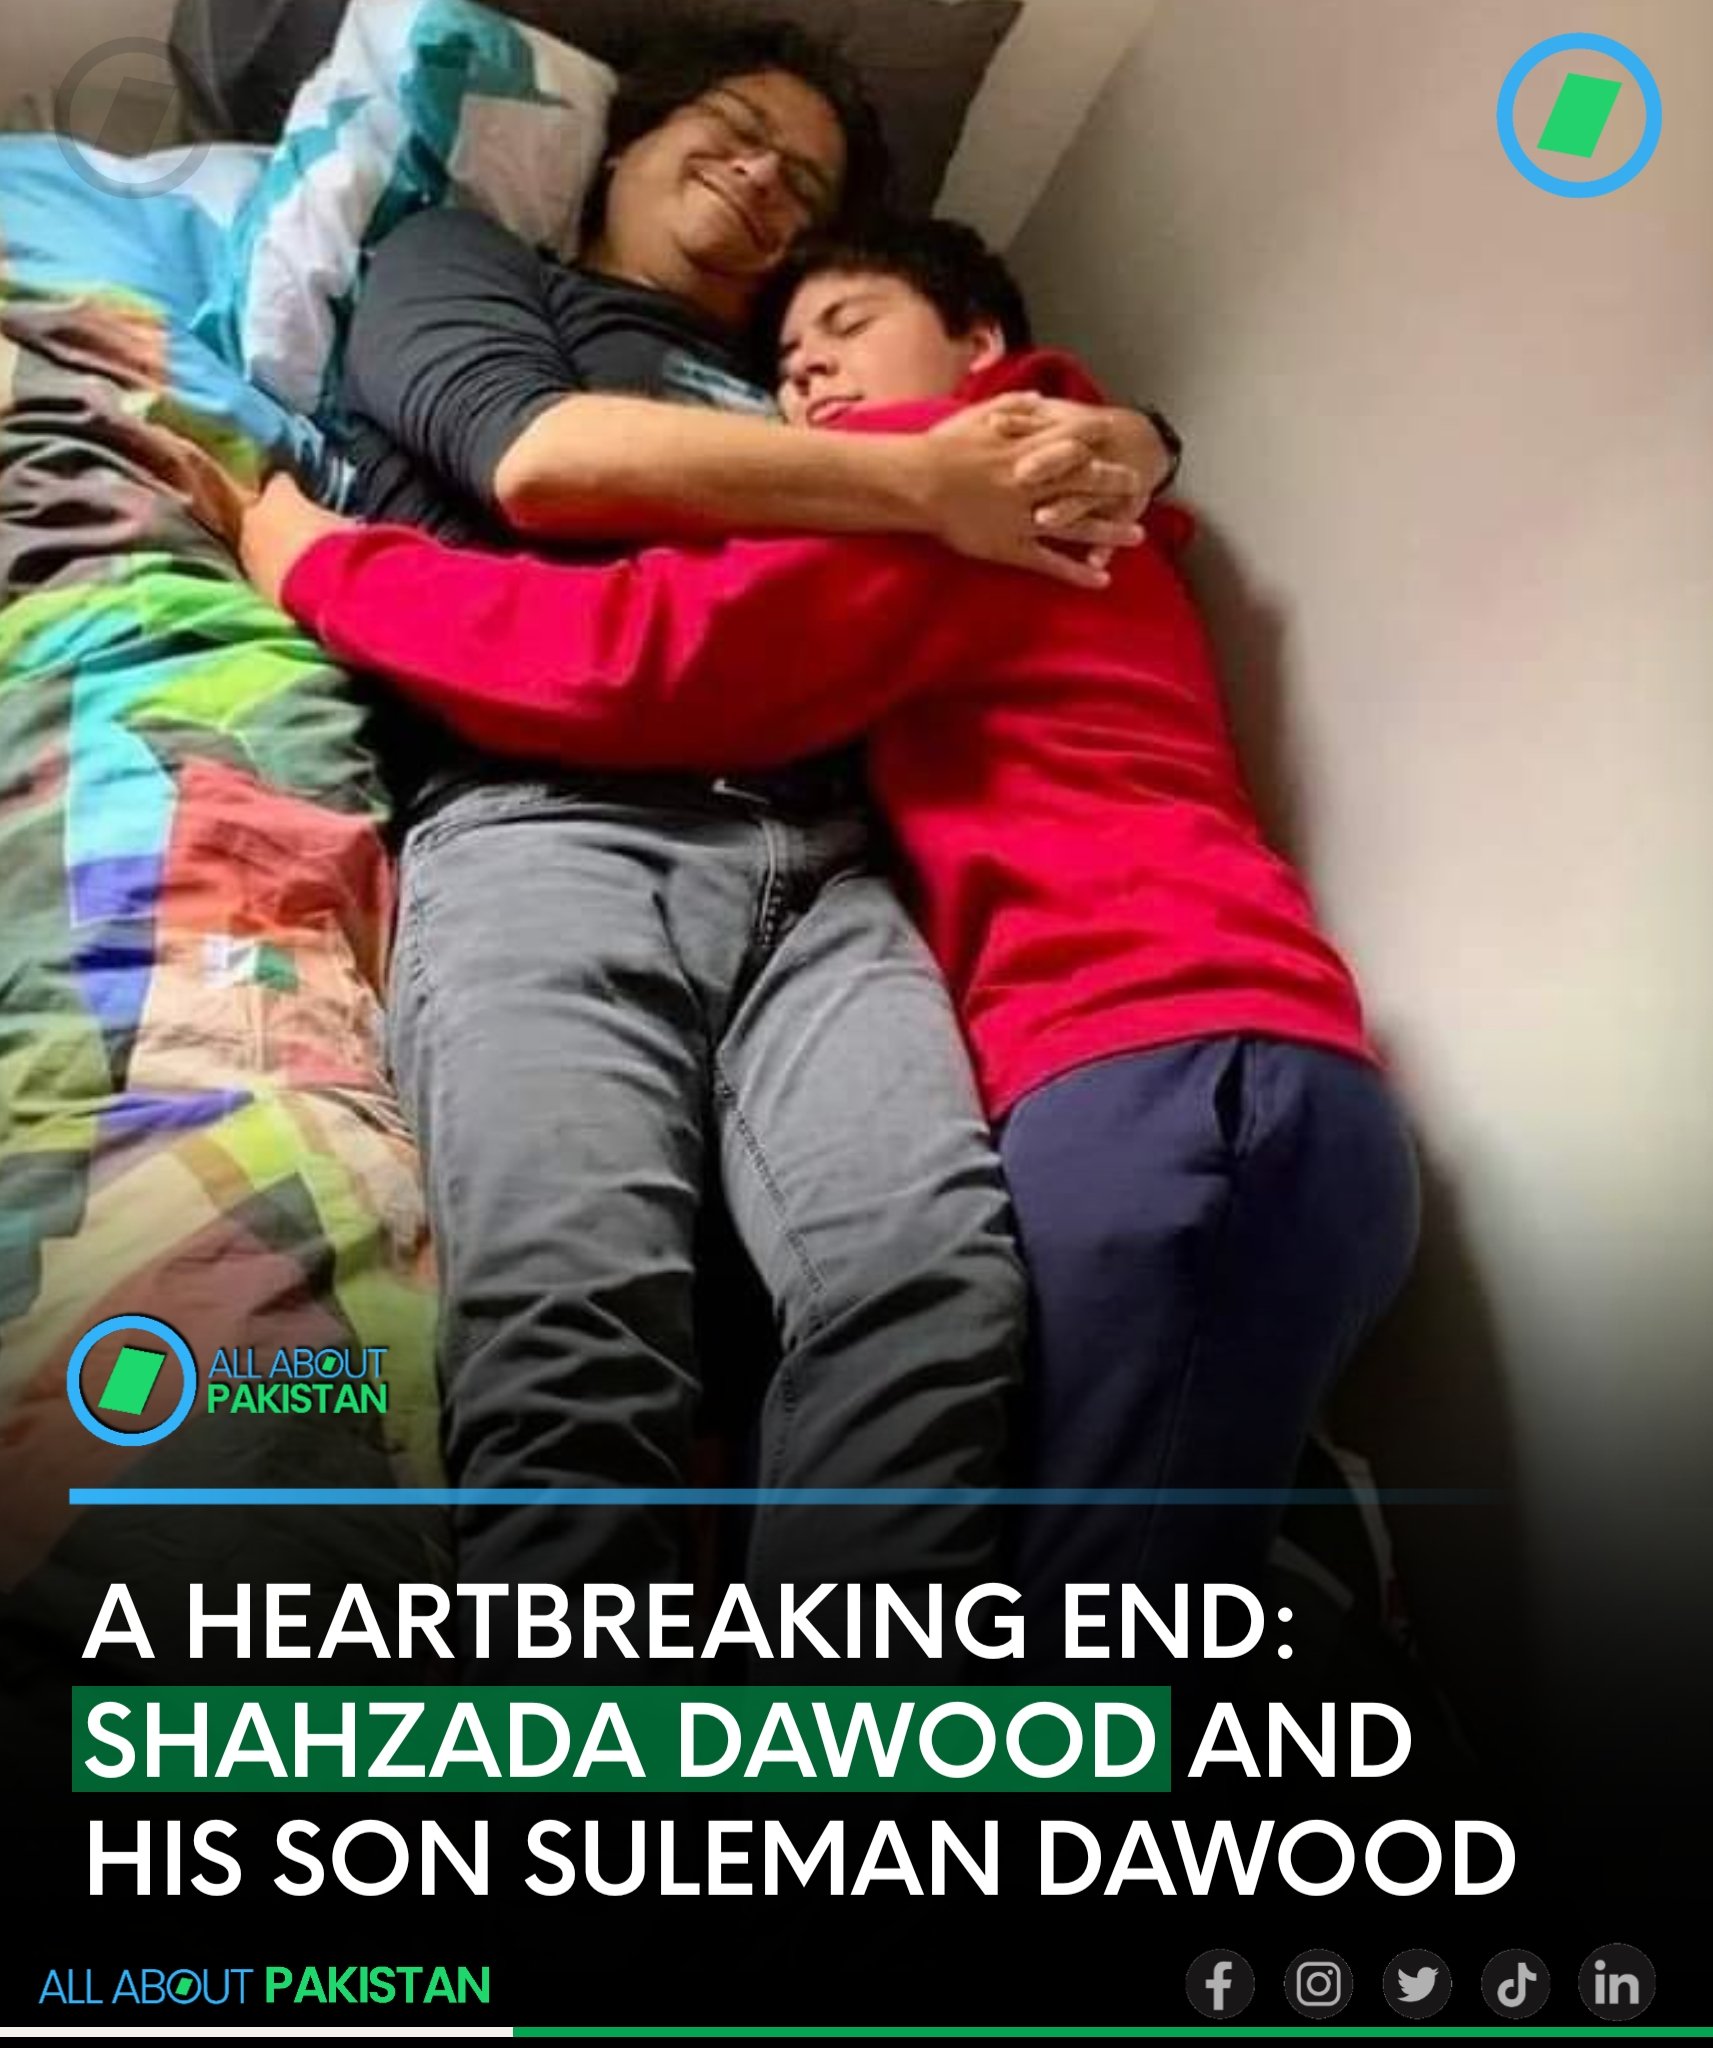 Shahzada Dawood